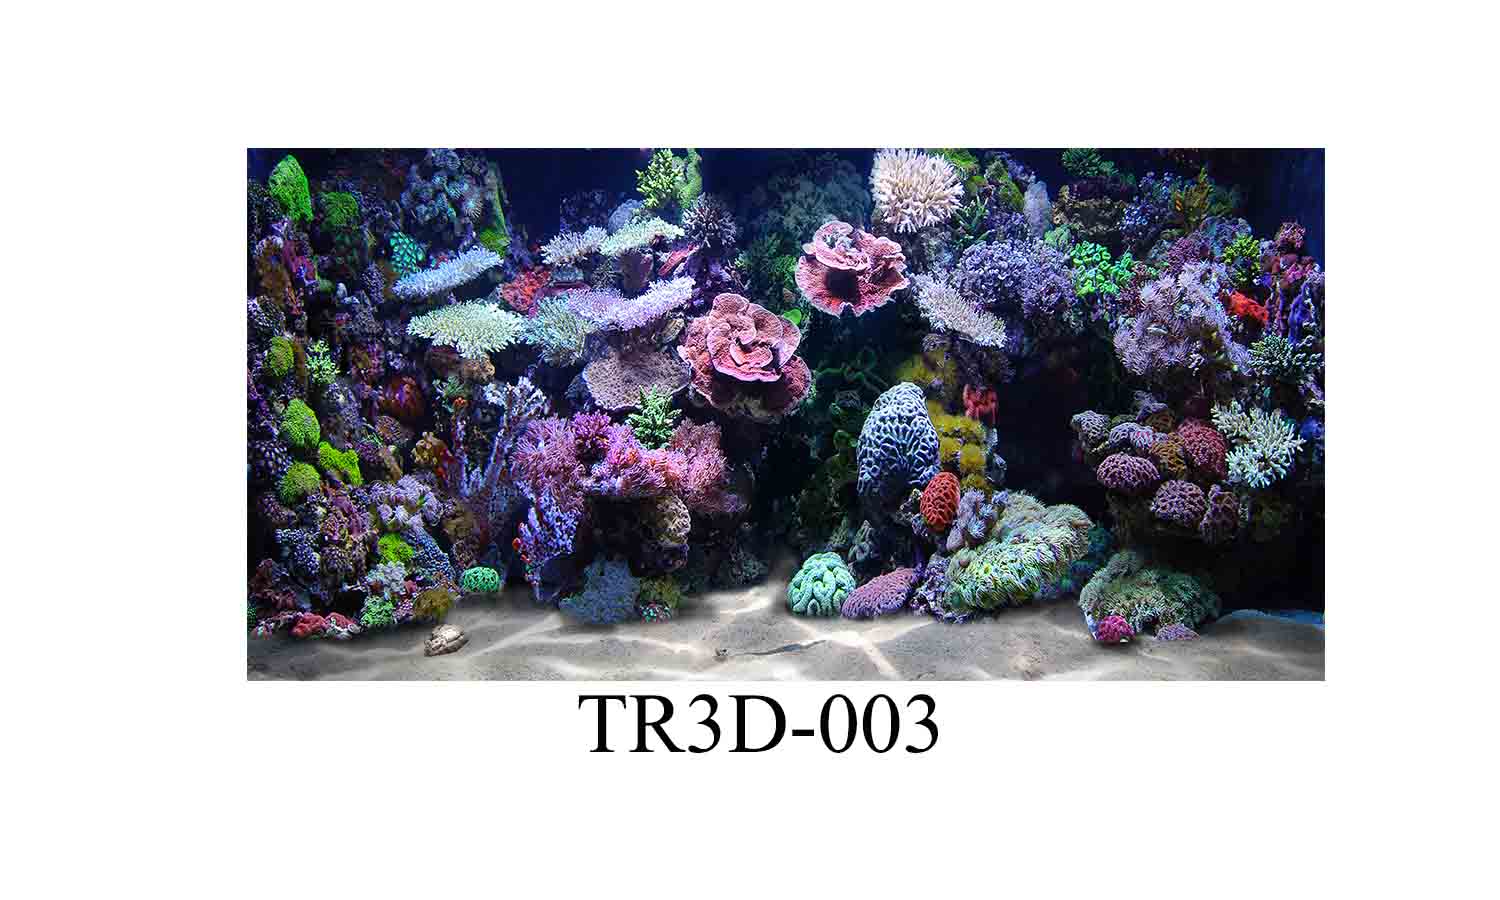 003 - Tranh hồ cá TR3D-003